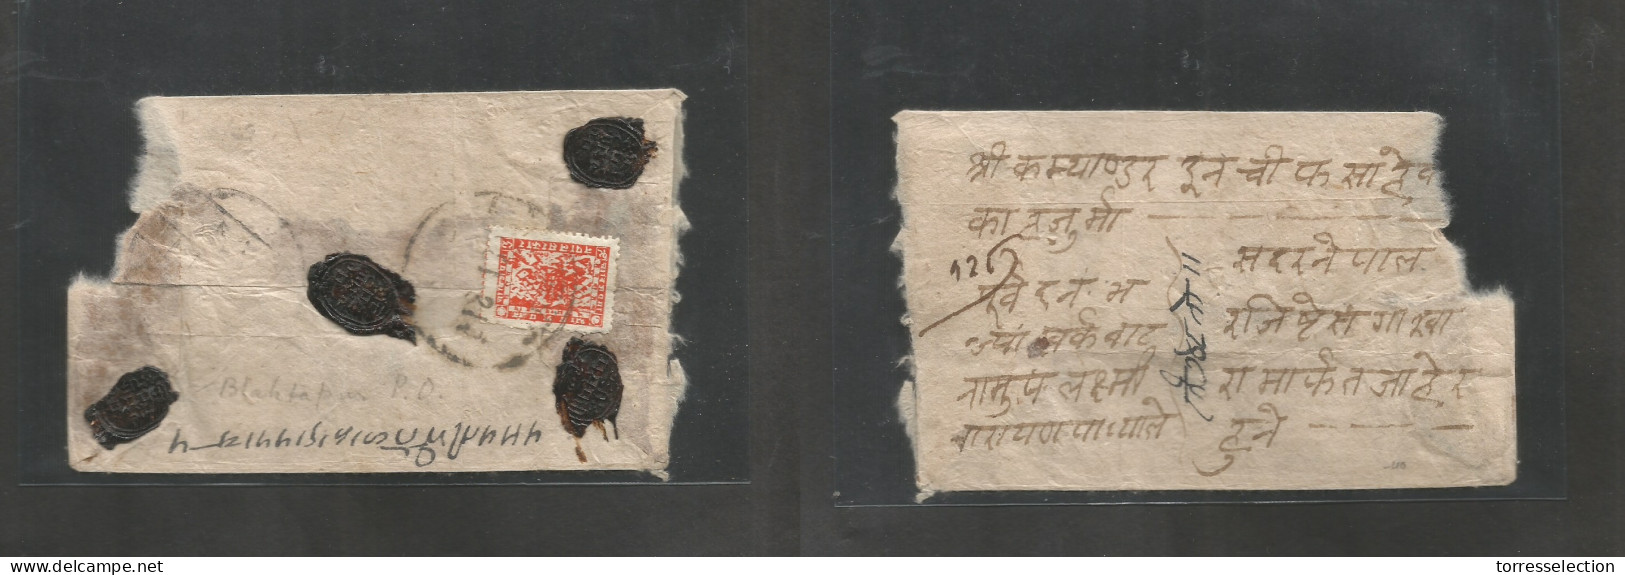 NEPAL. C. 1950s. Blacktapur Local Registered Single Fkd Env, Large Cds. Fine. - Nepal